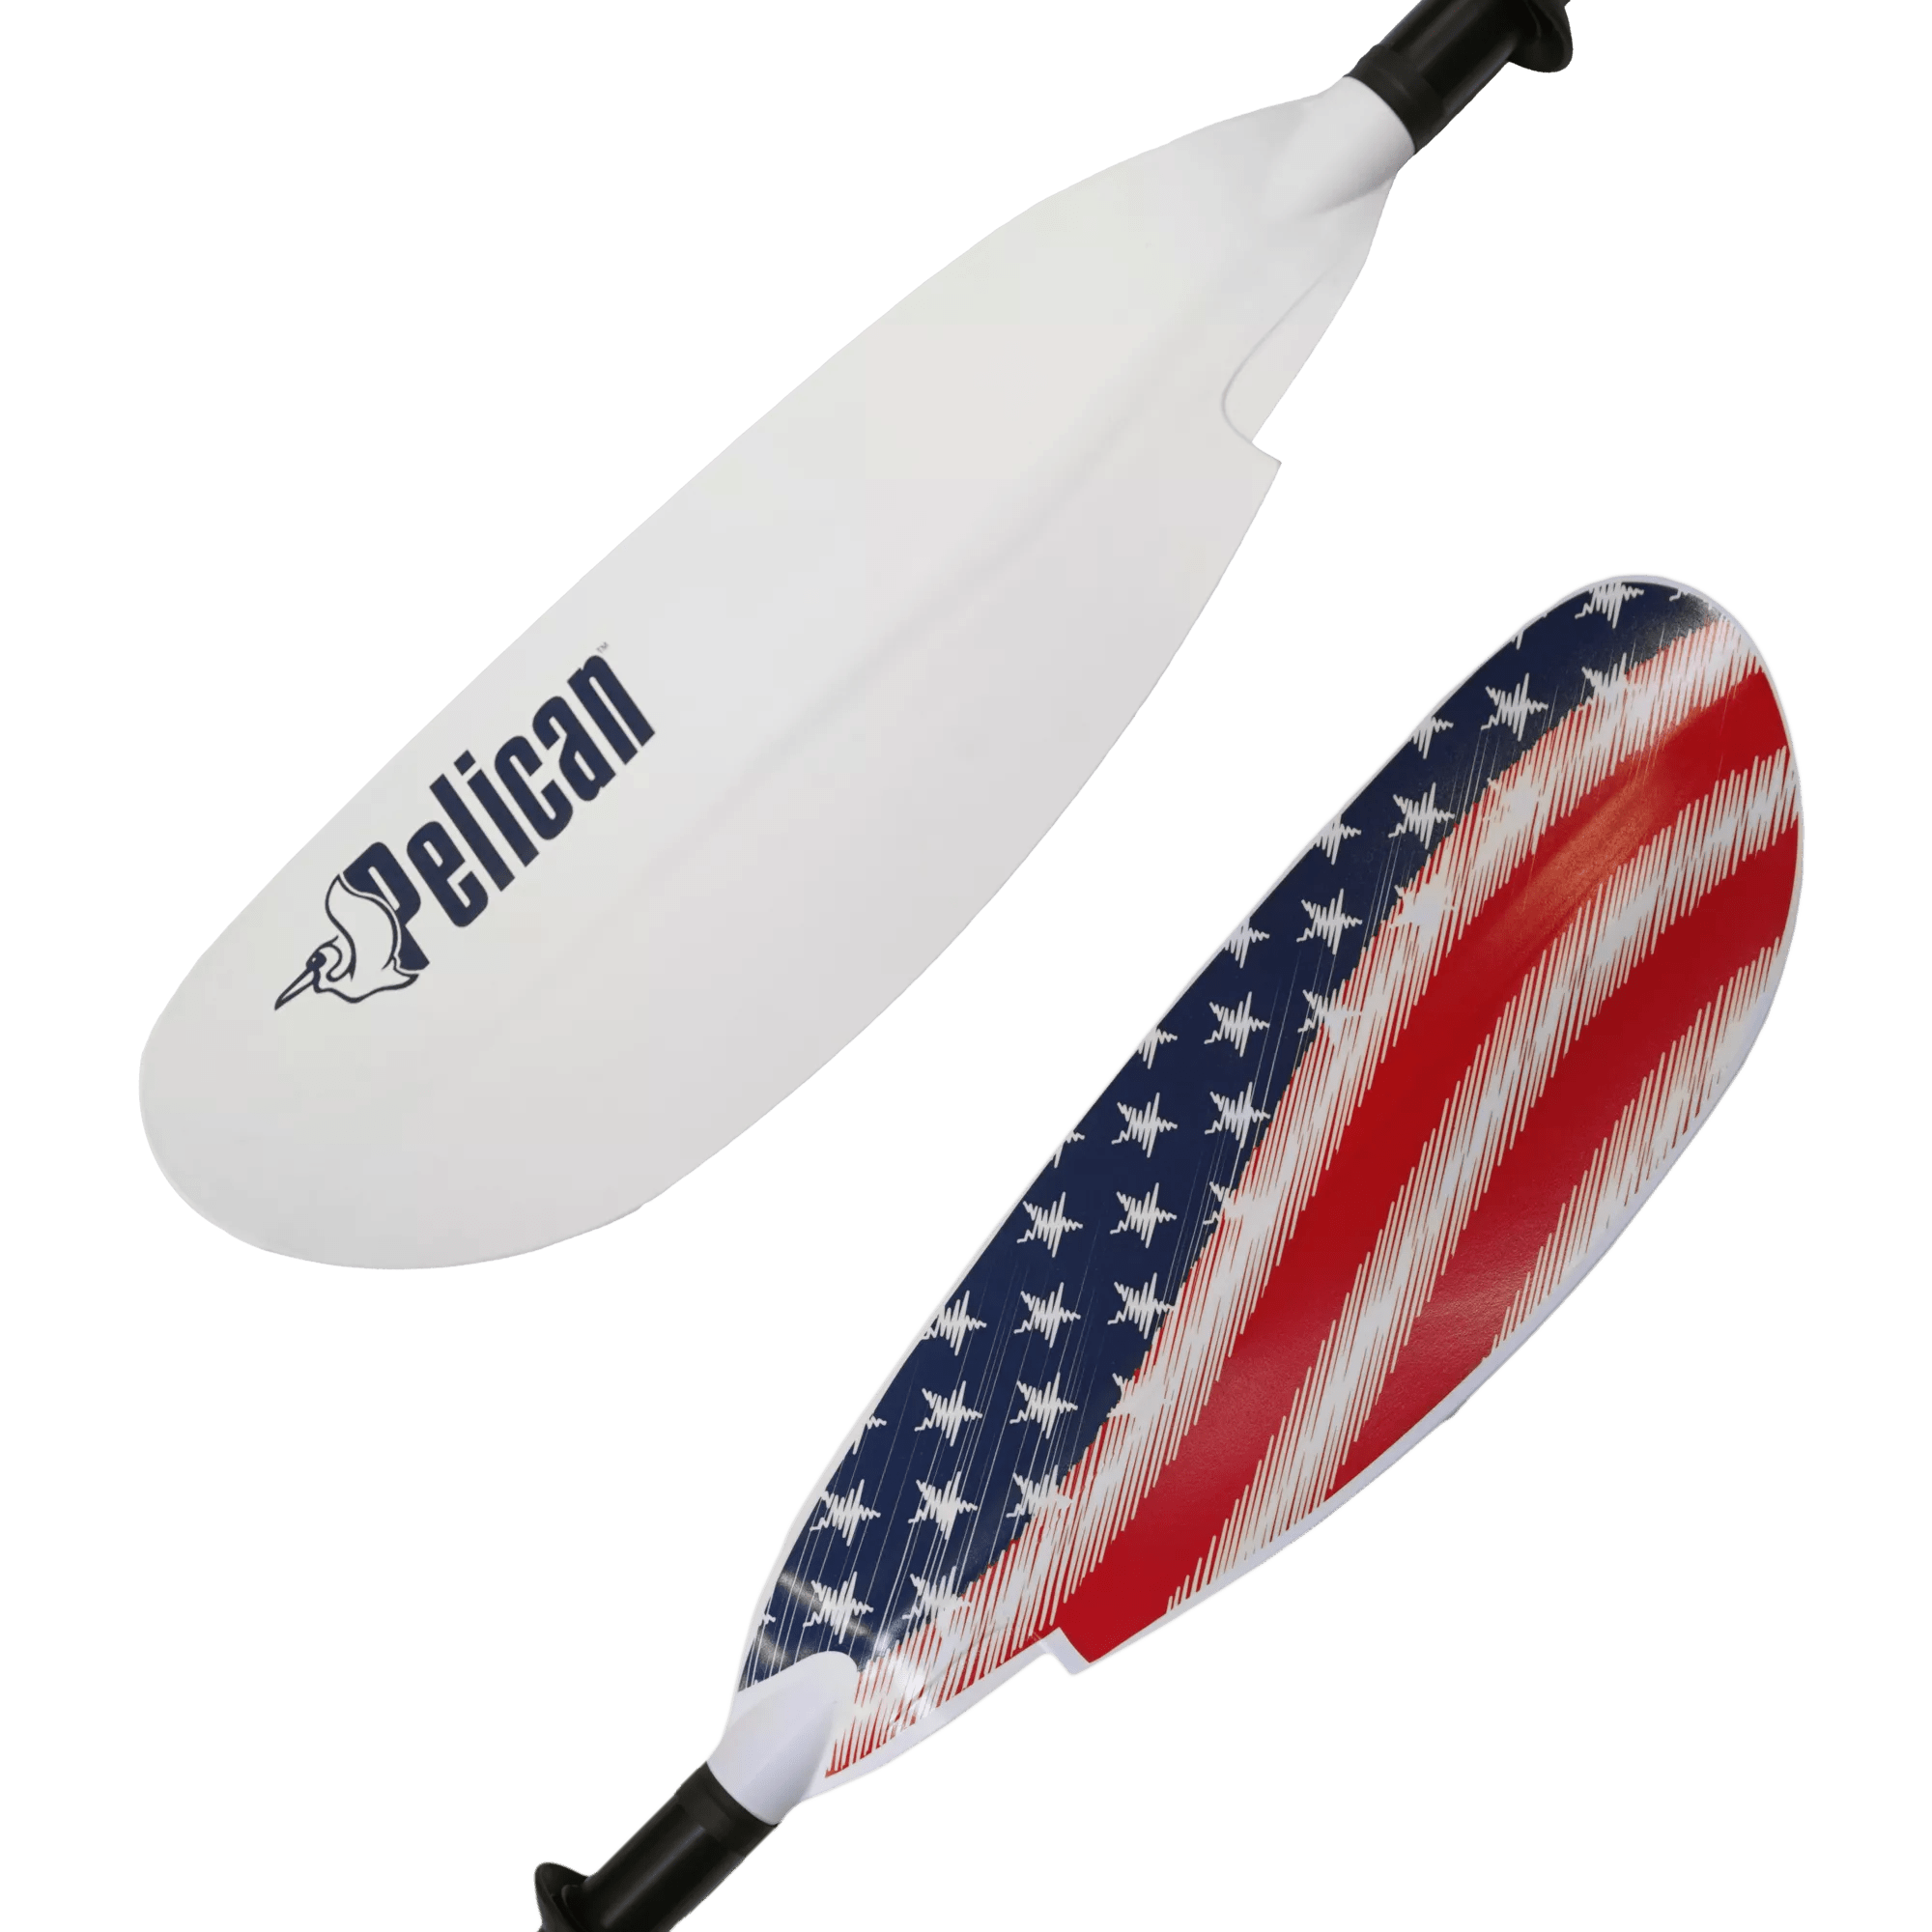 PELICAN - Pagaie de kayak Poseidon de 230 cm (90,6 po) - Blue - PS1981-00 - ISO 